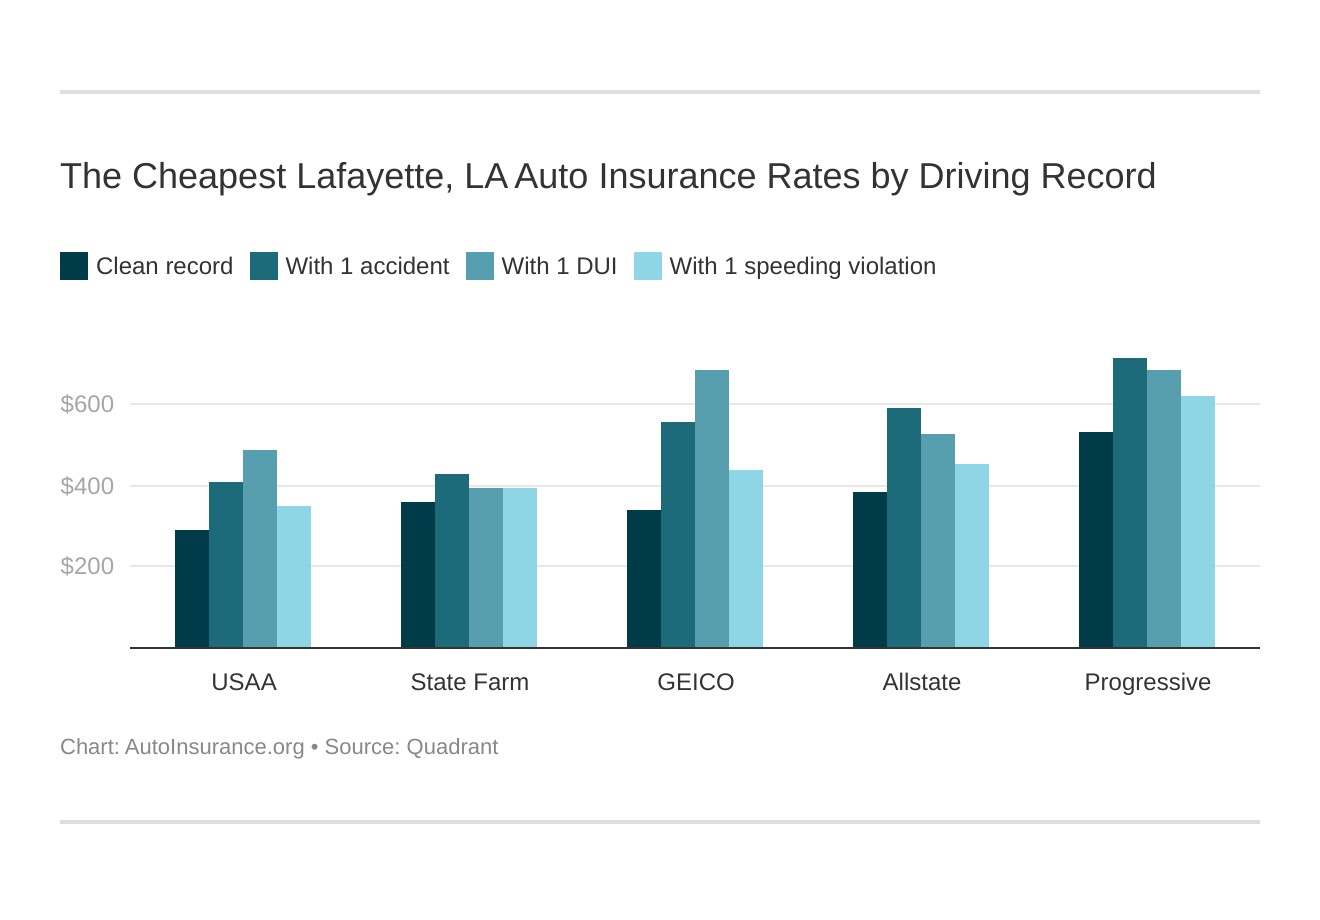 The Cheapest Lafayette, LA Auto Insurance Rates by Driving Record